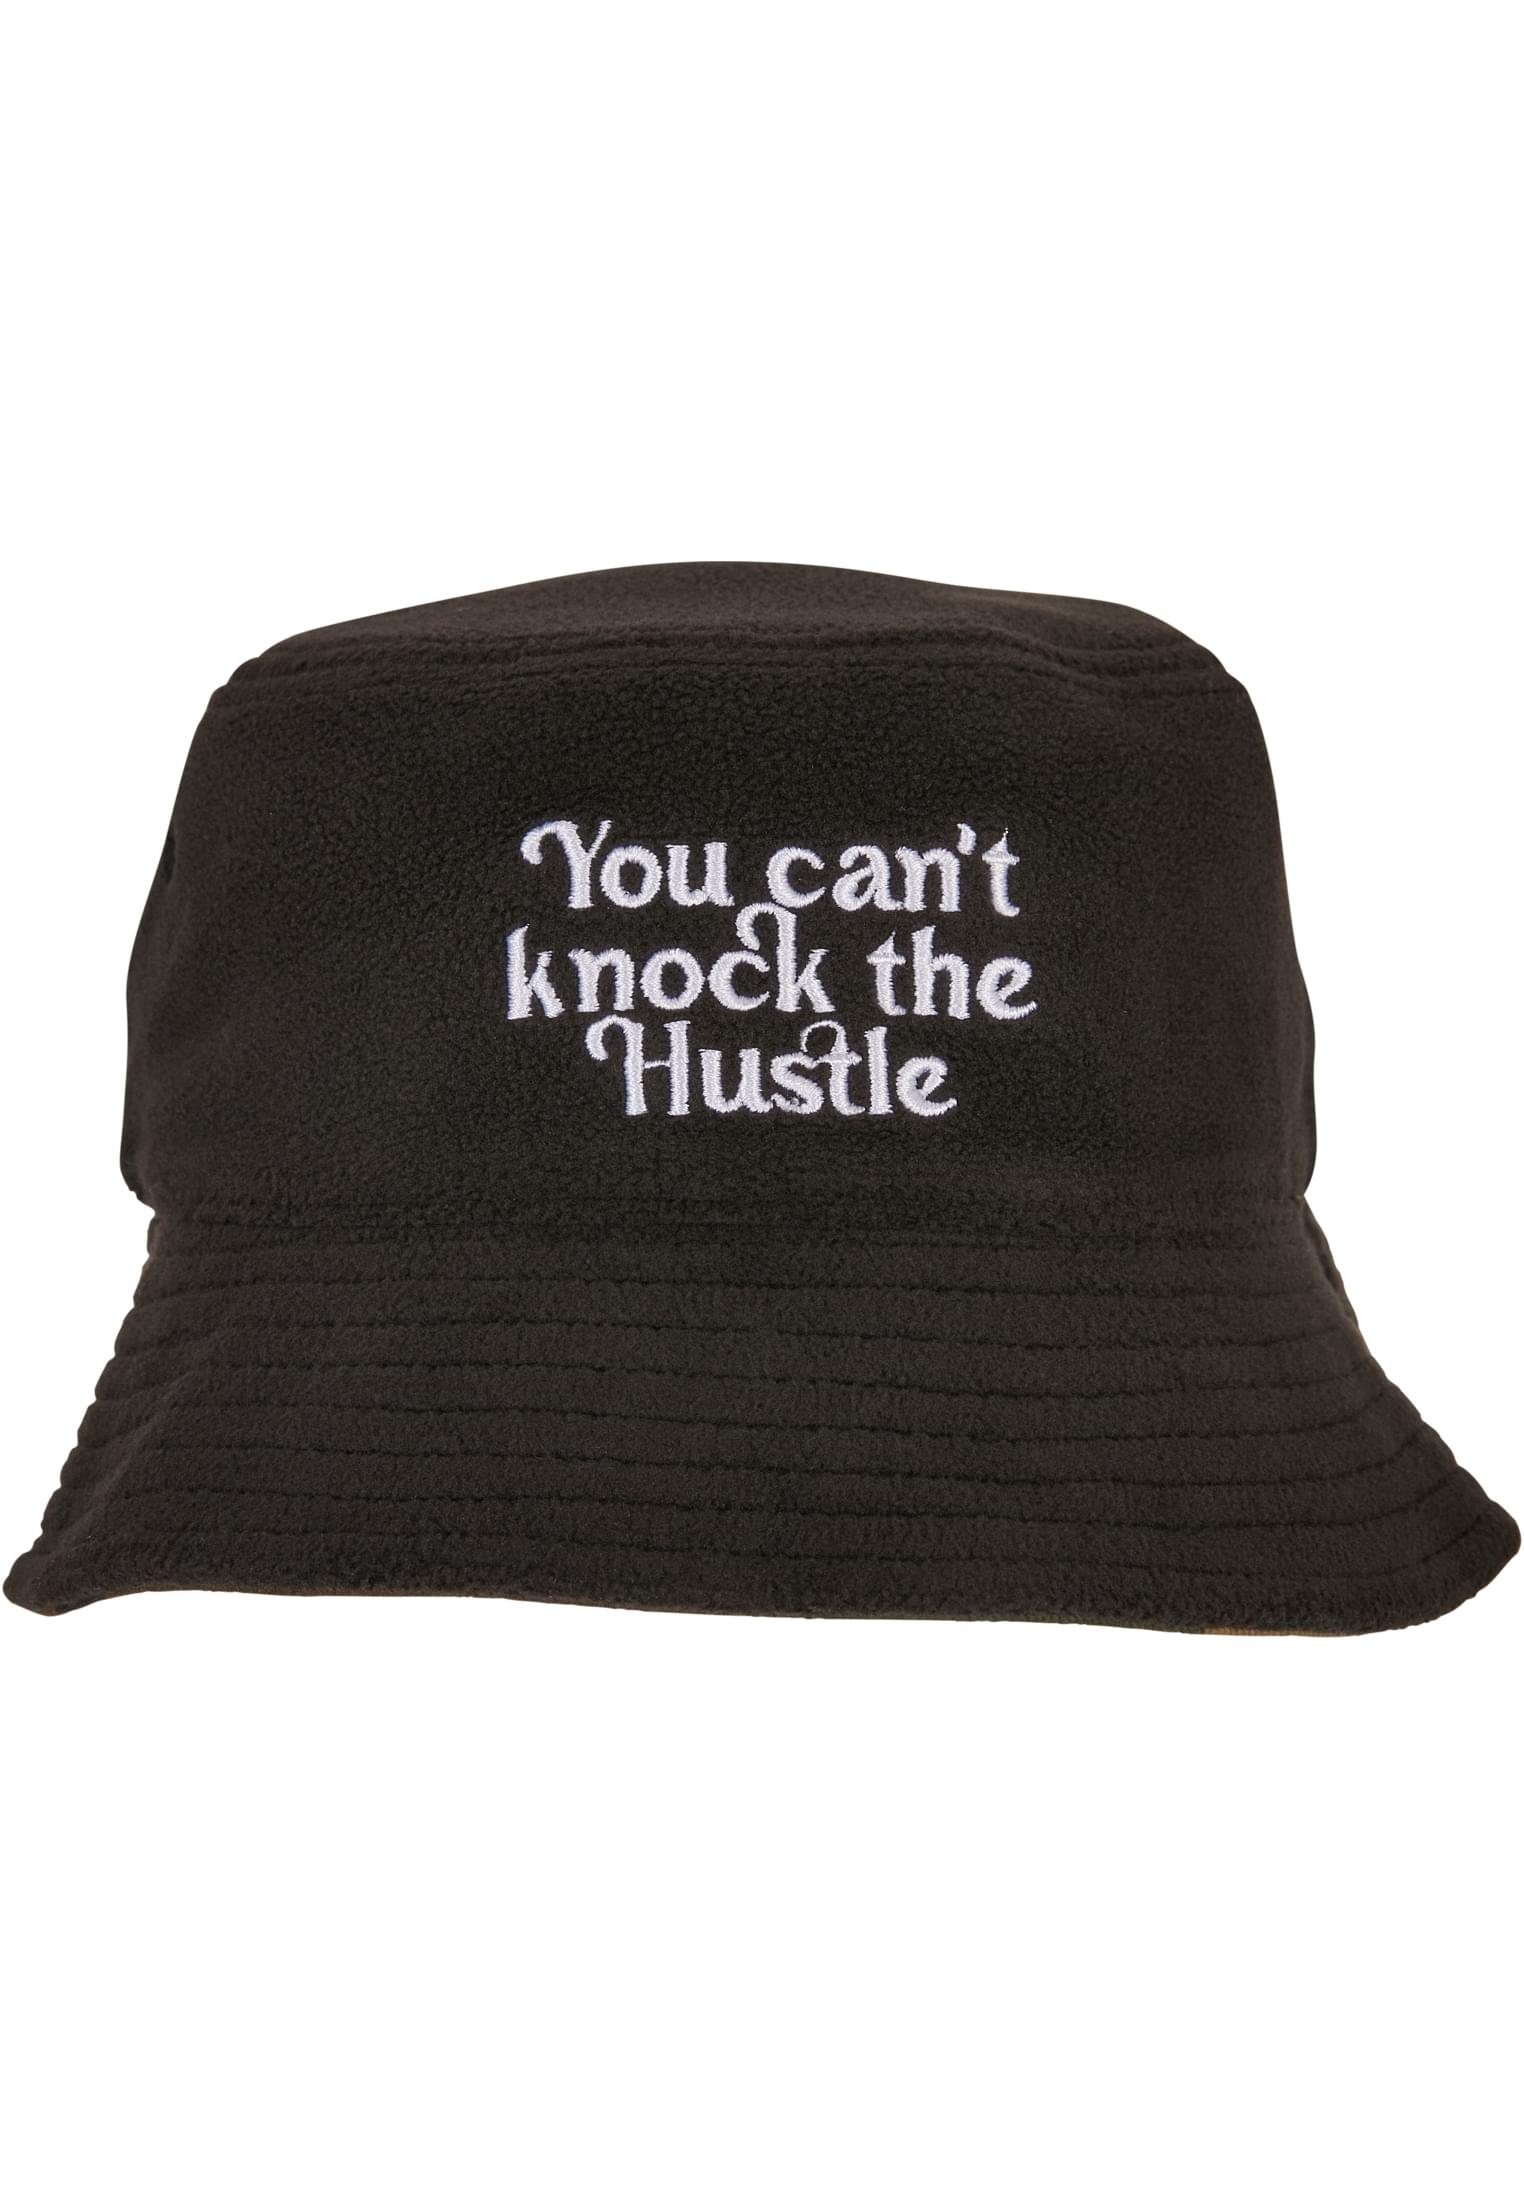 Hustle CAYLER Flex Hat Accessoires Knock SONS Cap & the Bucket